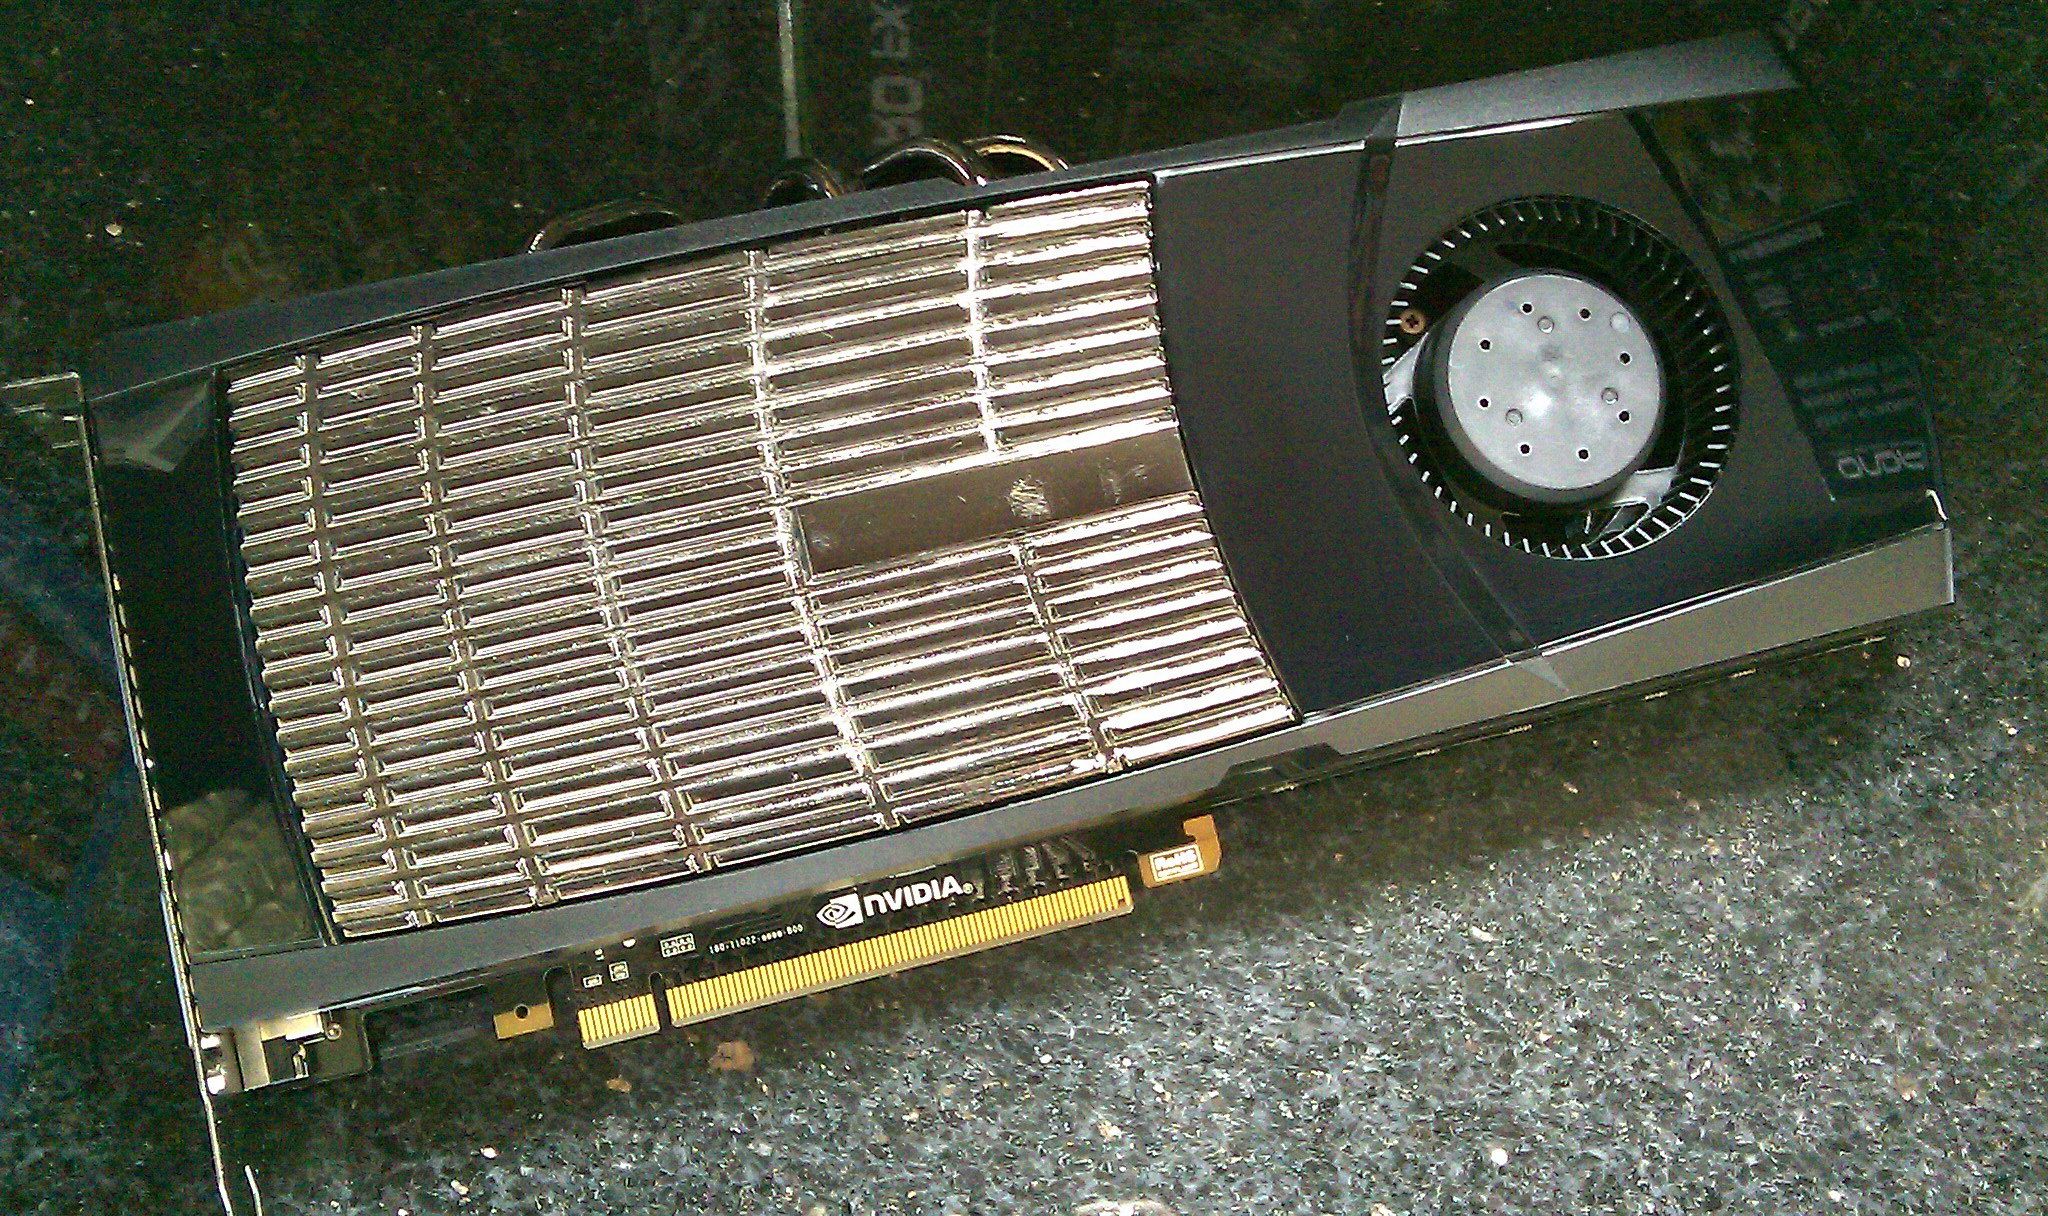 The Nvidia GeForce GTX 480 graphics card.